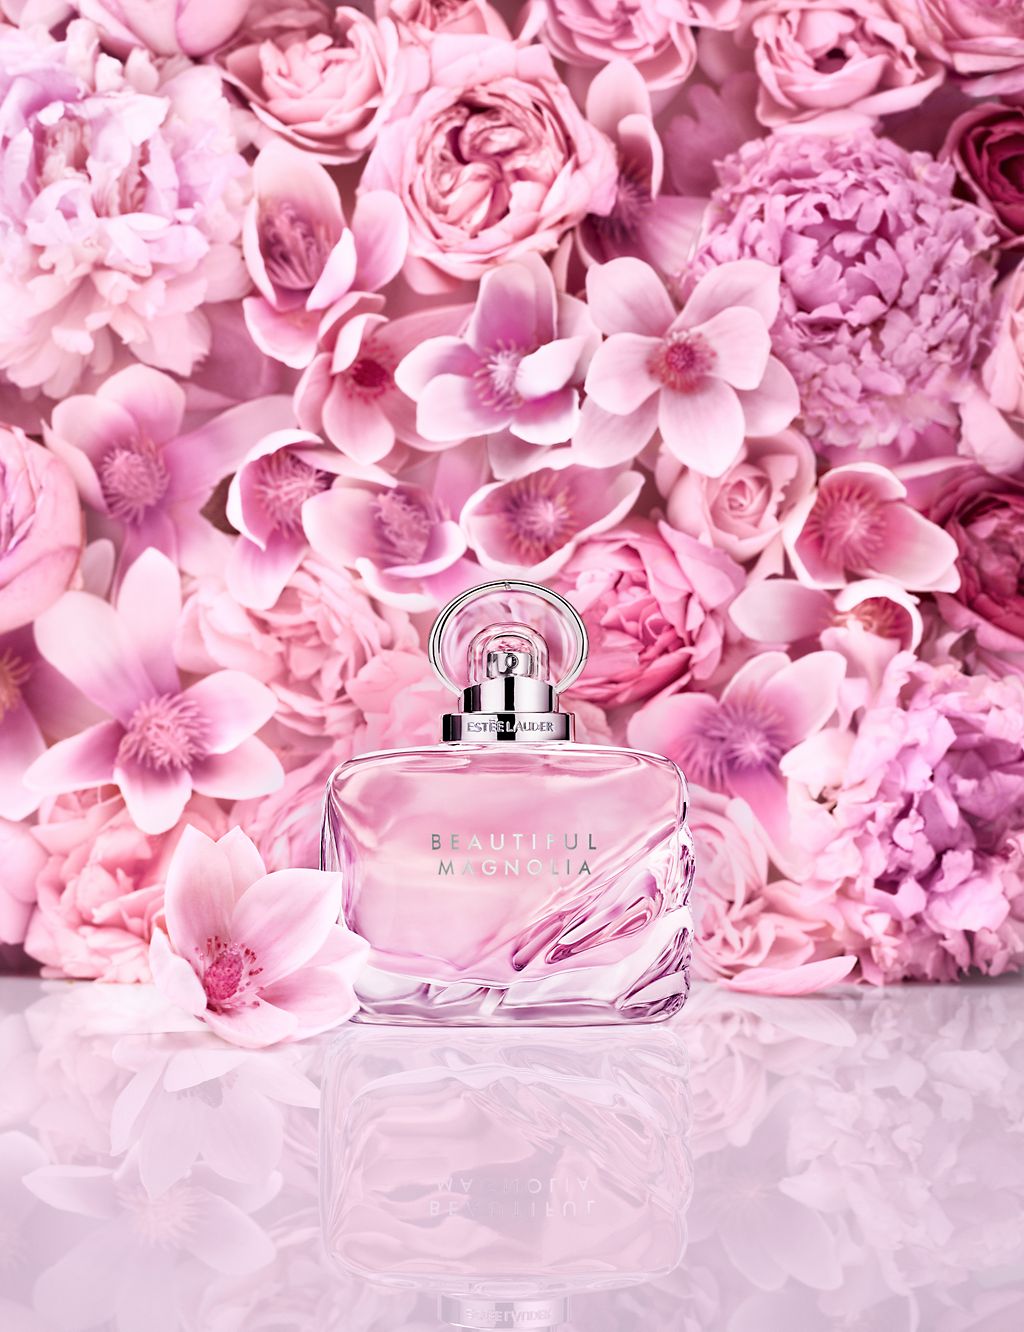 Beautiful Magnolia Duo Eau de Parfum Gift Set 32.7ml 2 of 3